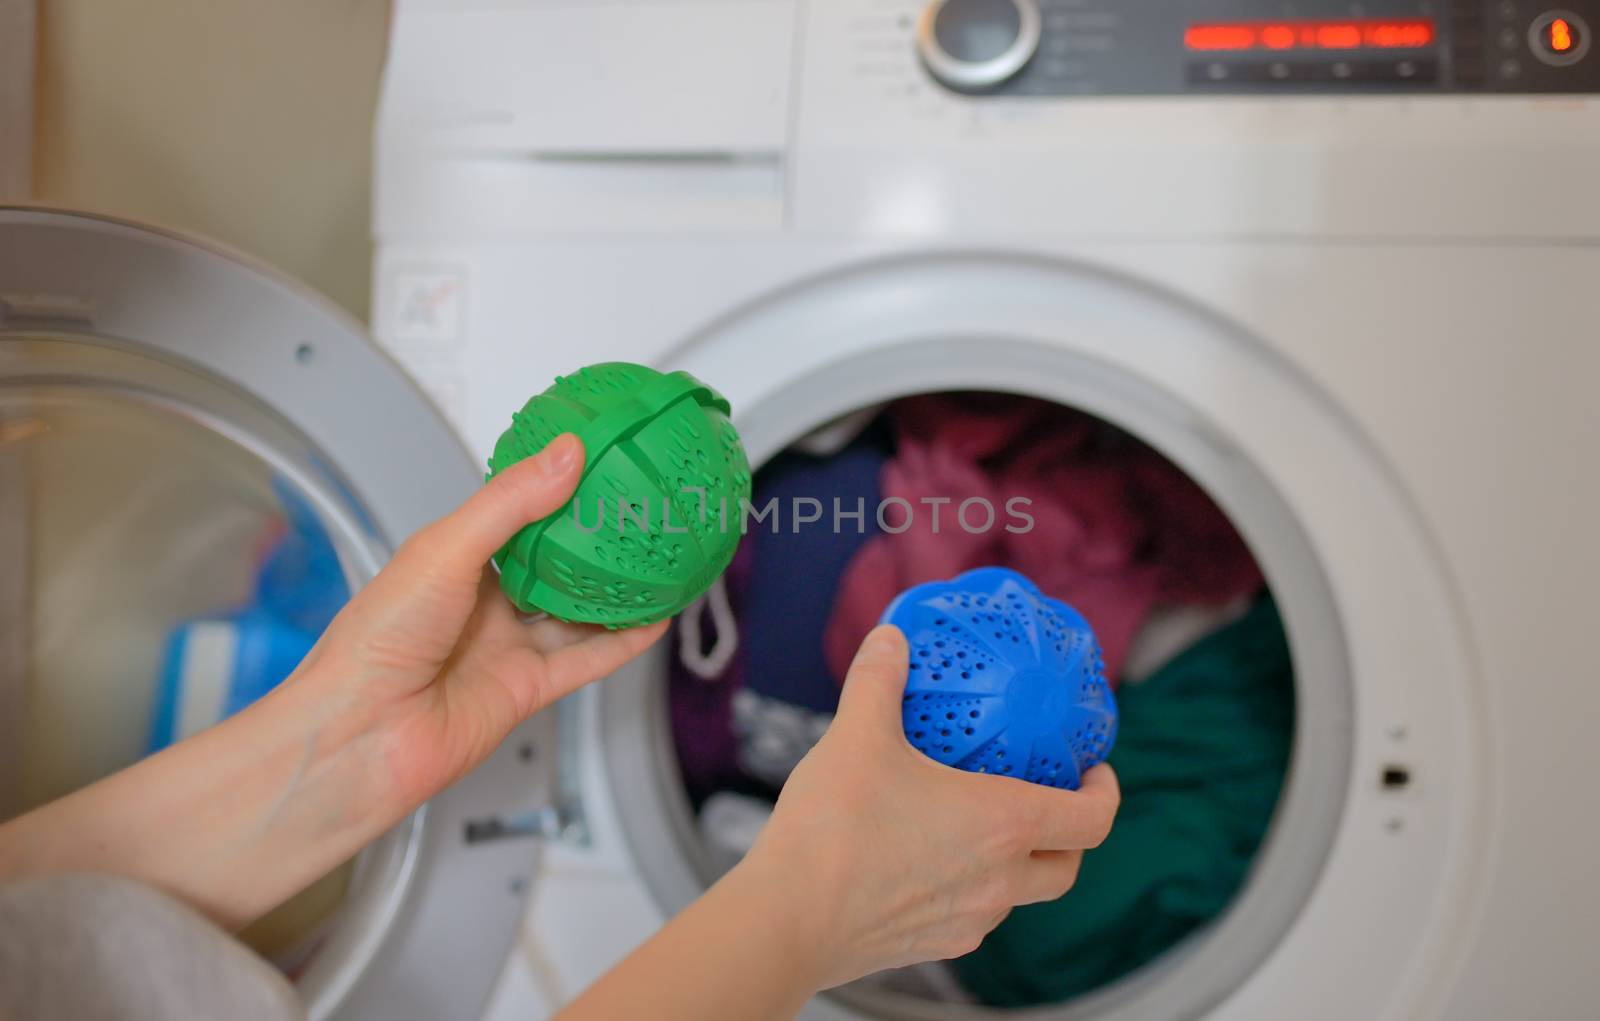 Laundry eco washing spheres  by mady70